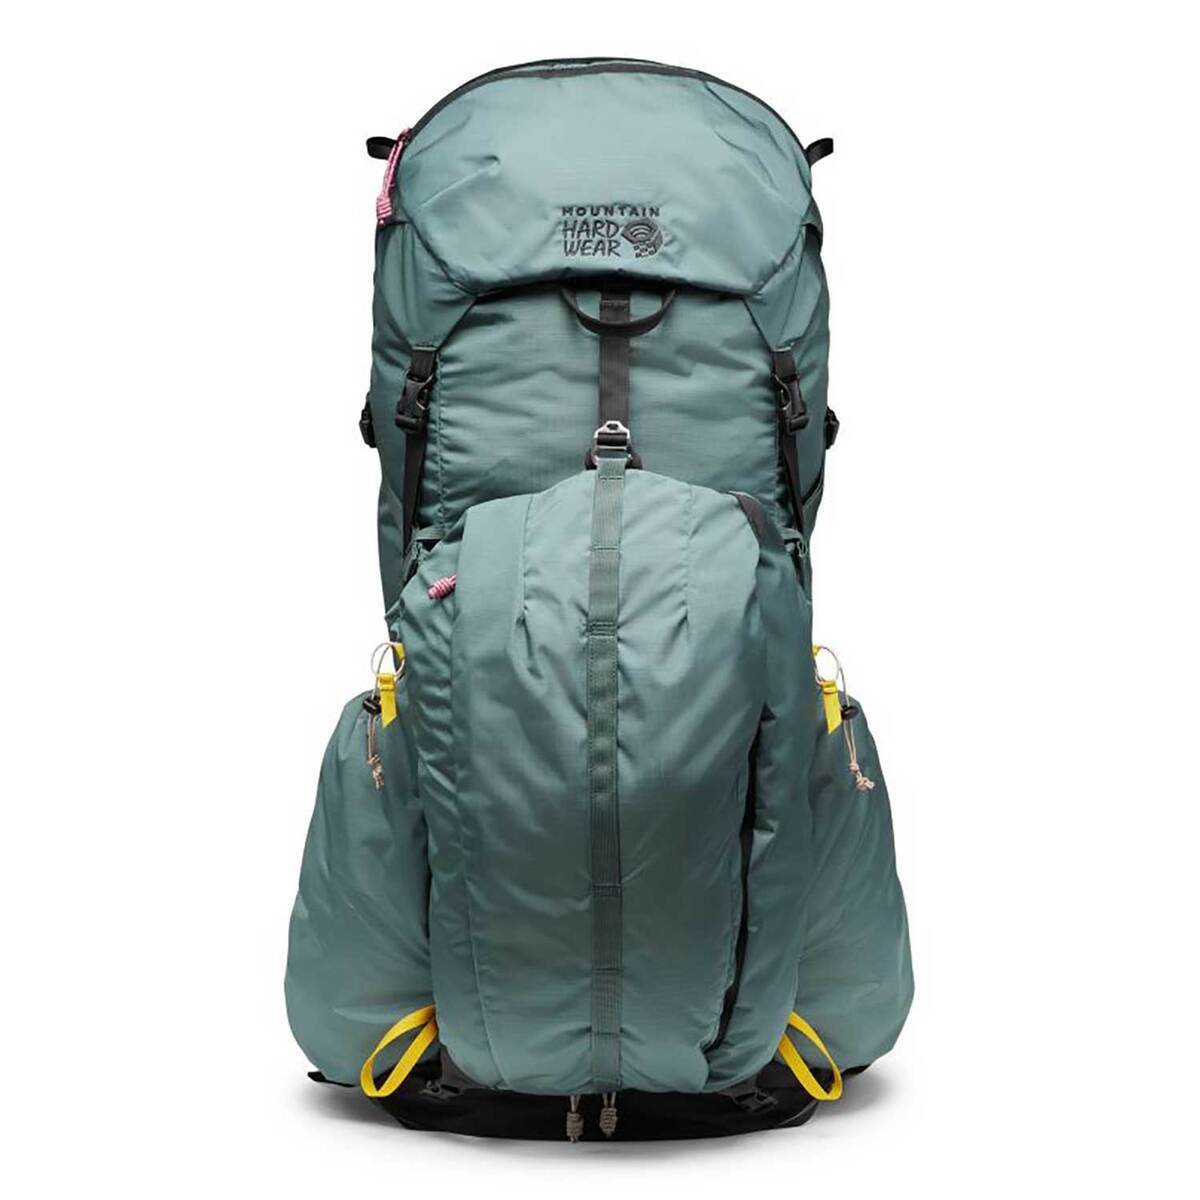 https://www.sportsmans.com/medias/mountain-hardwear-pct-55-liter-backpacking-pack-green-1707477-1.jpg?context=bWFzdGVyfGltYWdlc3w2NTA4NXxpbWFnZS9qcGVnfGgxYy9oOTgvMTAyNDA0NTk5NjQ0NDYvMTcwNzQ3Ny0xX2Jhc2UtY29udmVyc2lvbkZvcm1hdF8xMjAwLWNvbnZlcnNpb25Gb3JtYXR8MGZiMTExODg3MjRmYjZmMDVlNzIzODE2NWNlMDIyNzQzOWIyZWIyYTMxN2Y2NWQ2MmVlZmUwMGRhZmMwNTk4YQ